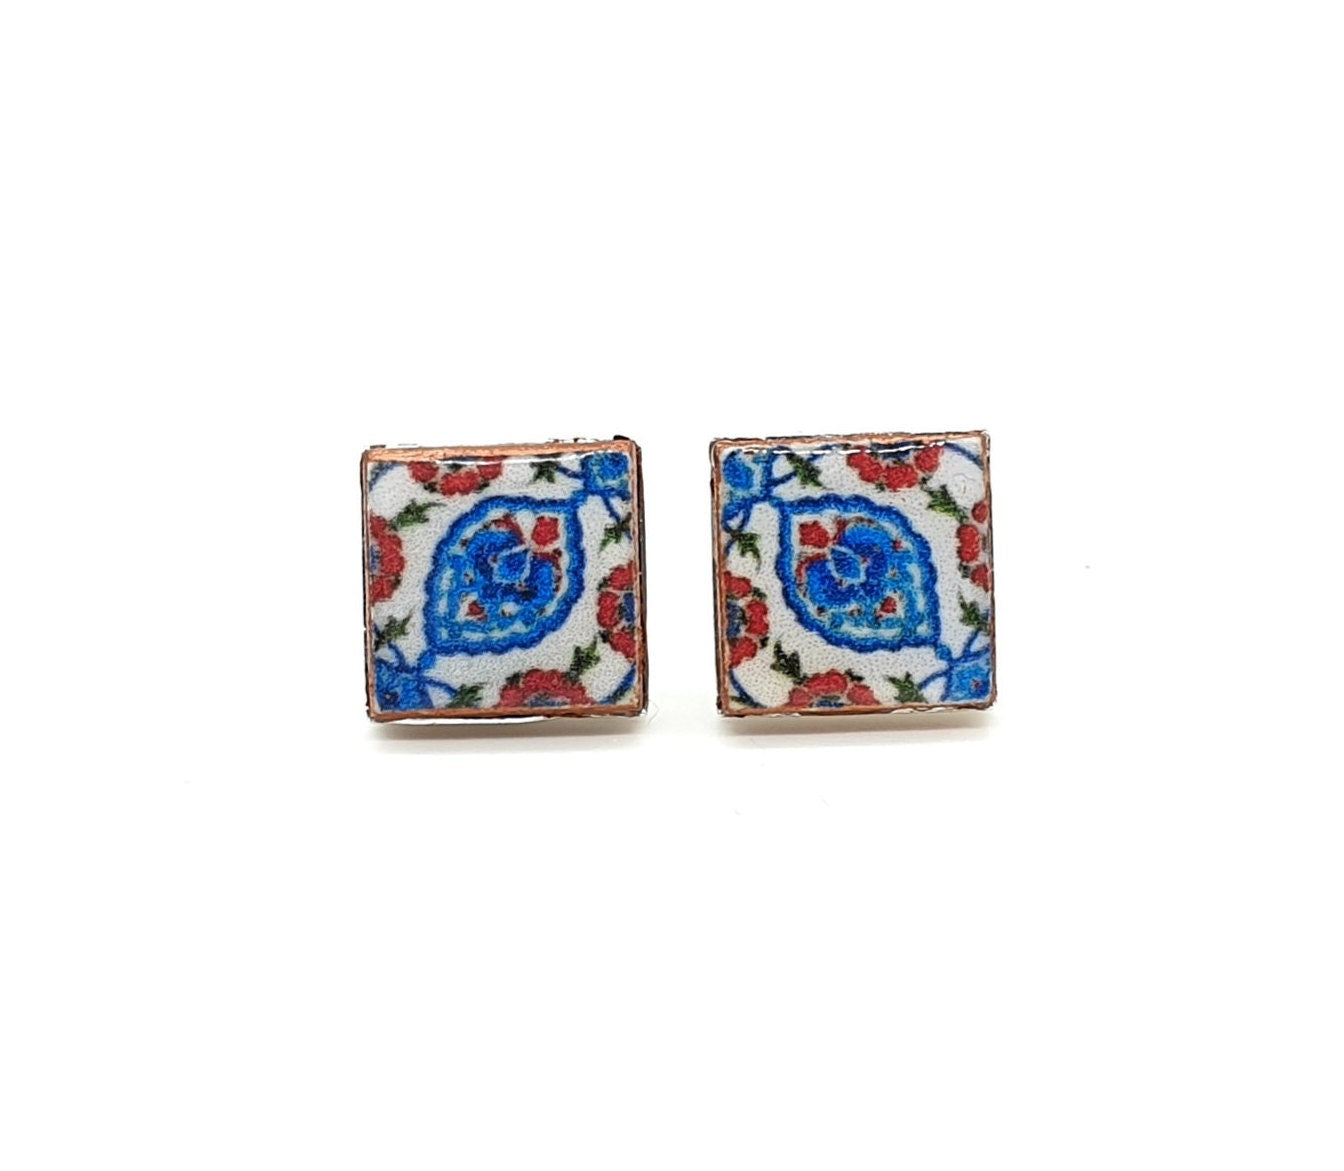 ELIF - Turkish Blue Red Tile Earrings